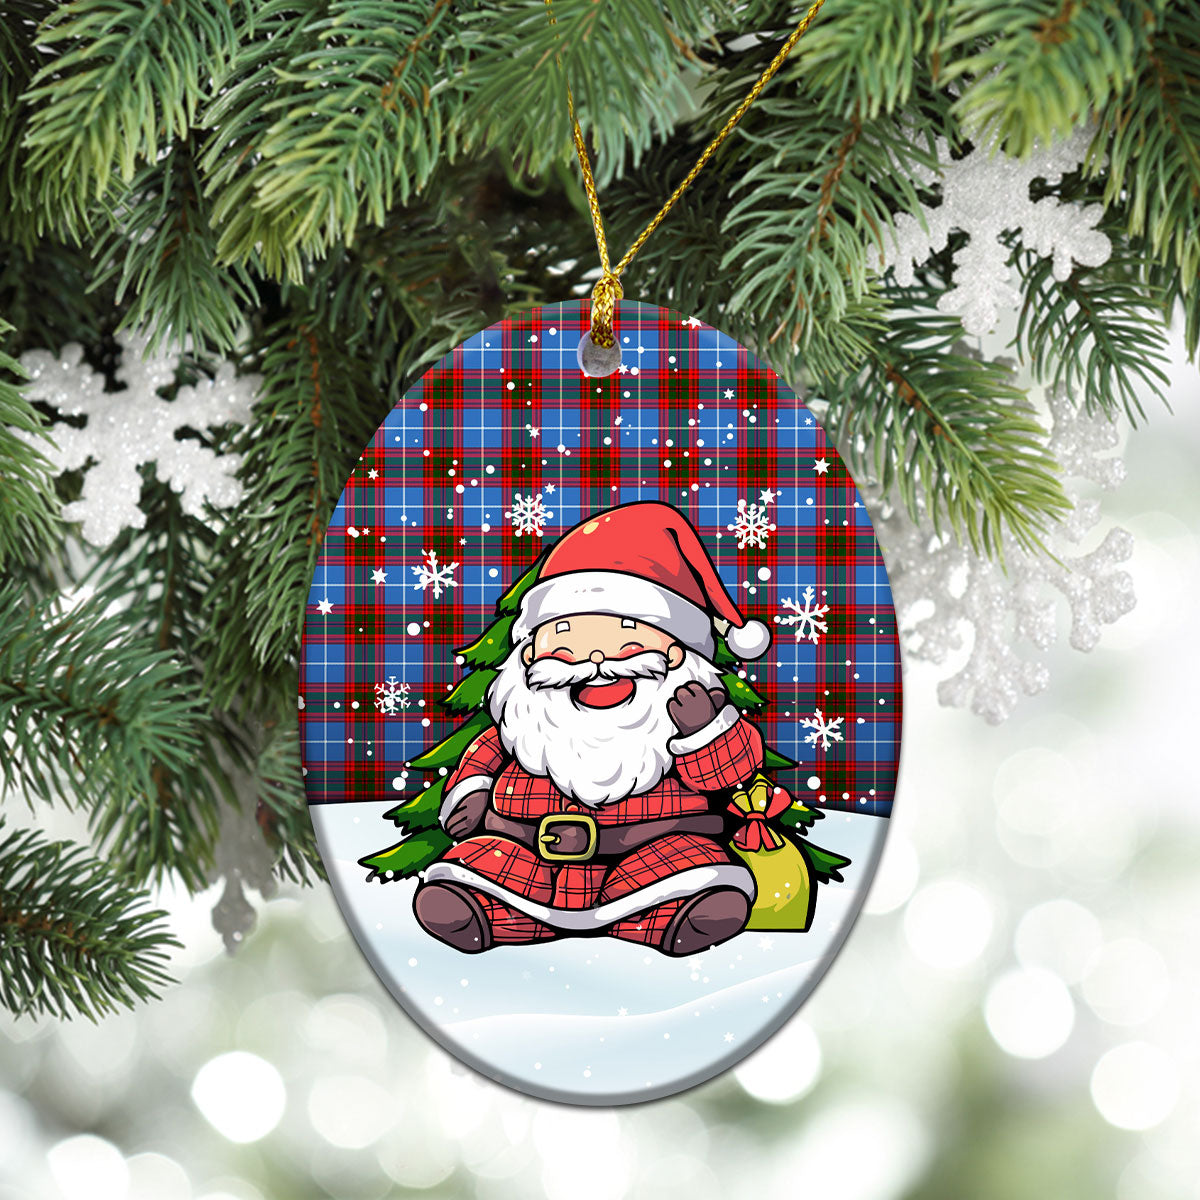 Spalding Tartan Christmas Ceramic Ornament - Scottish Santa Style